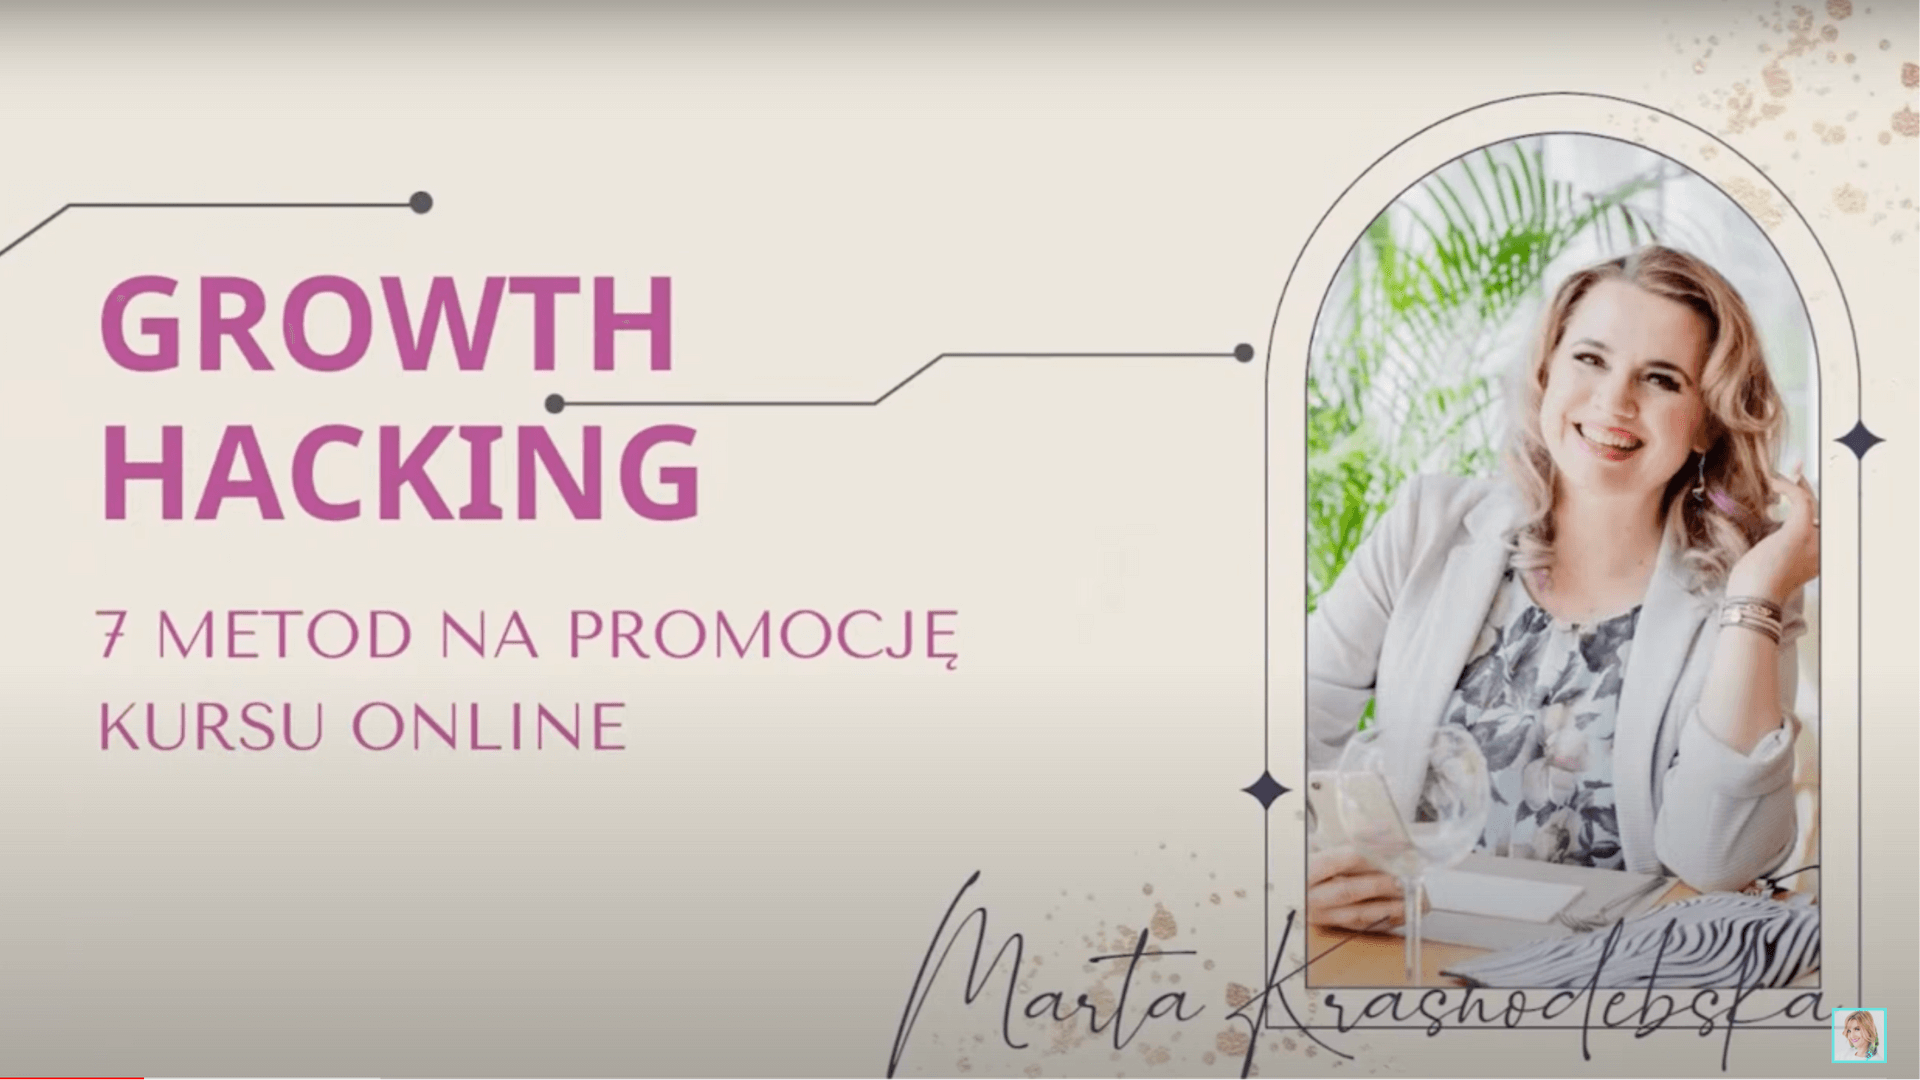 Growth Hacking – 7 metod na promocję kursu online